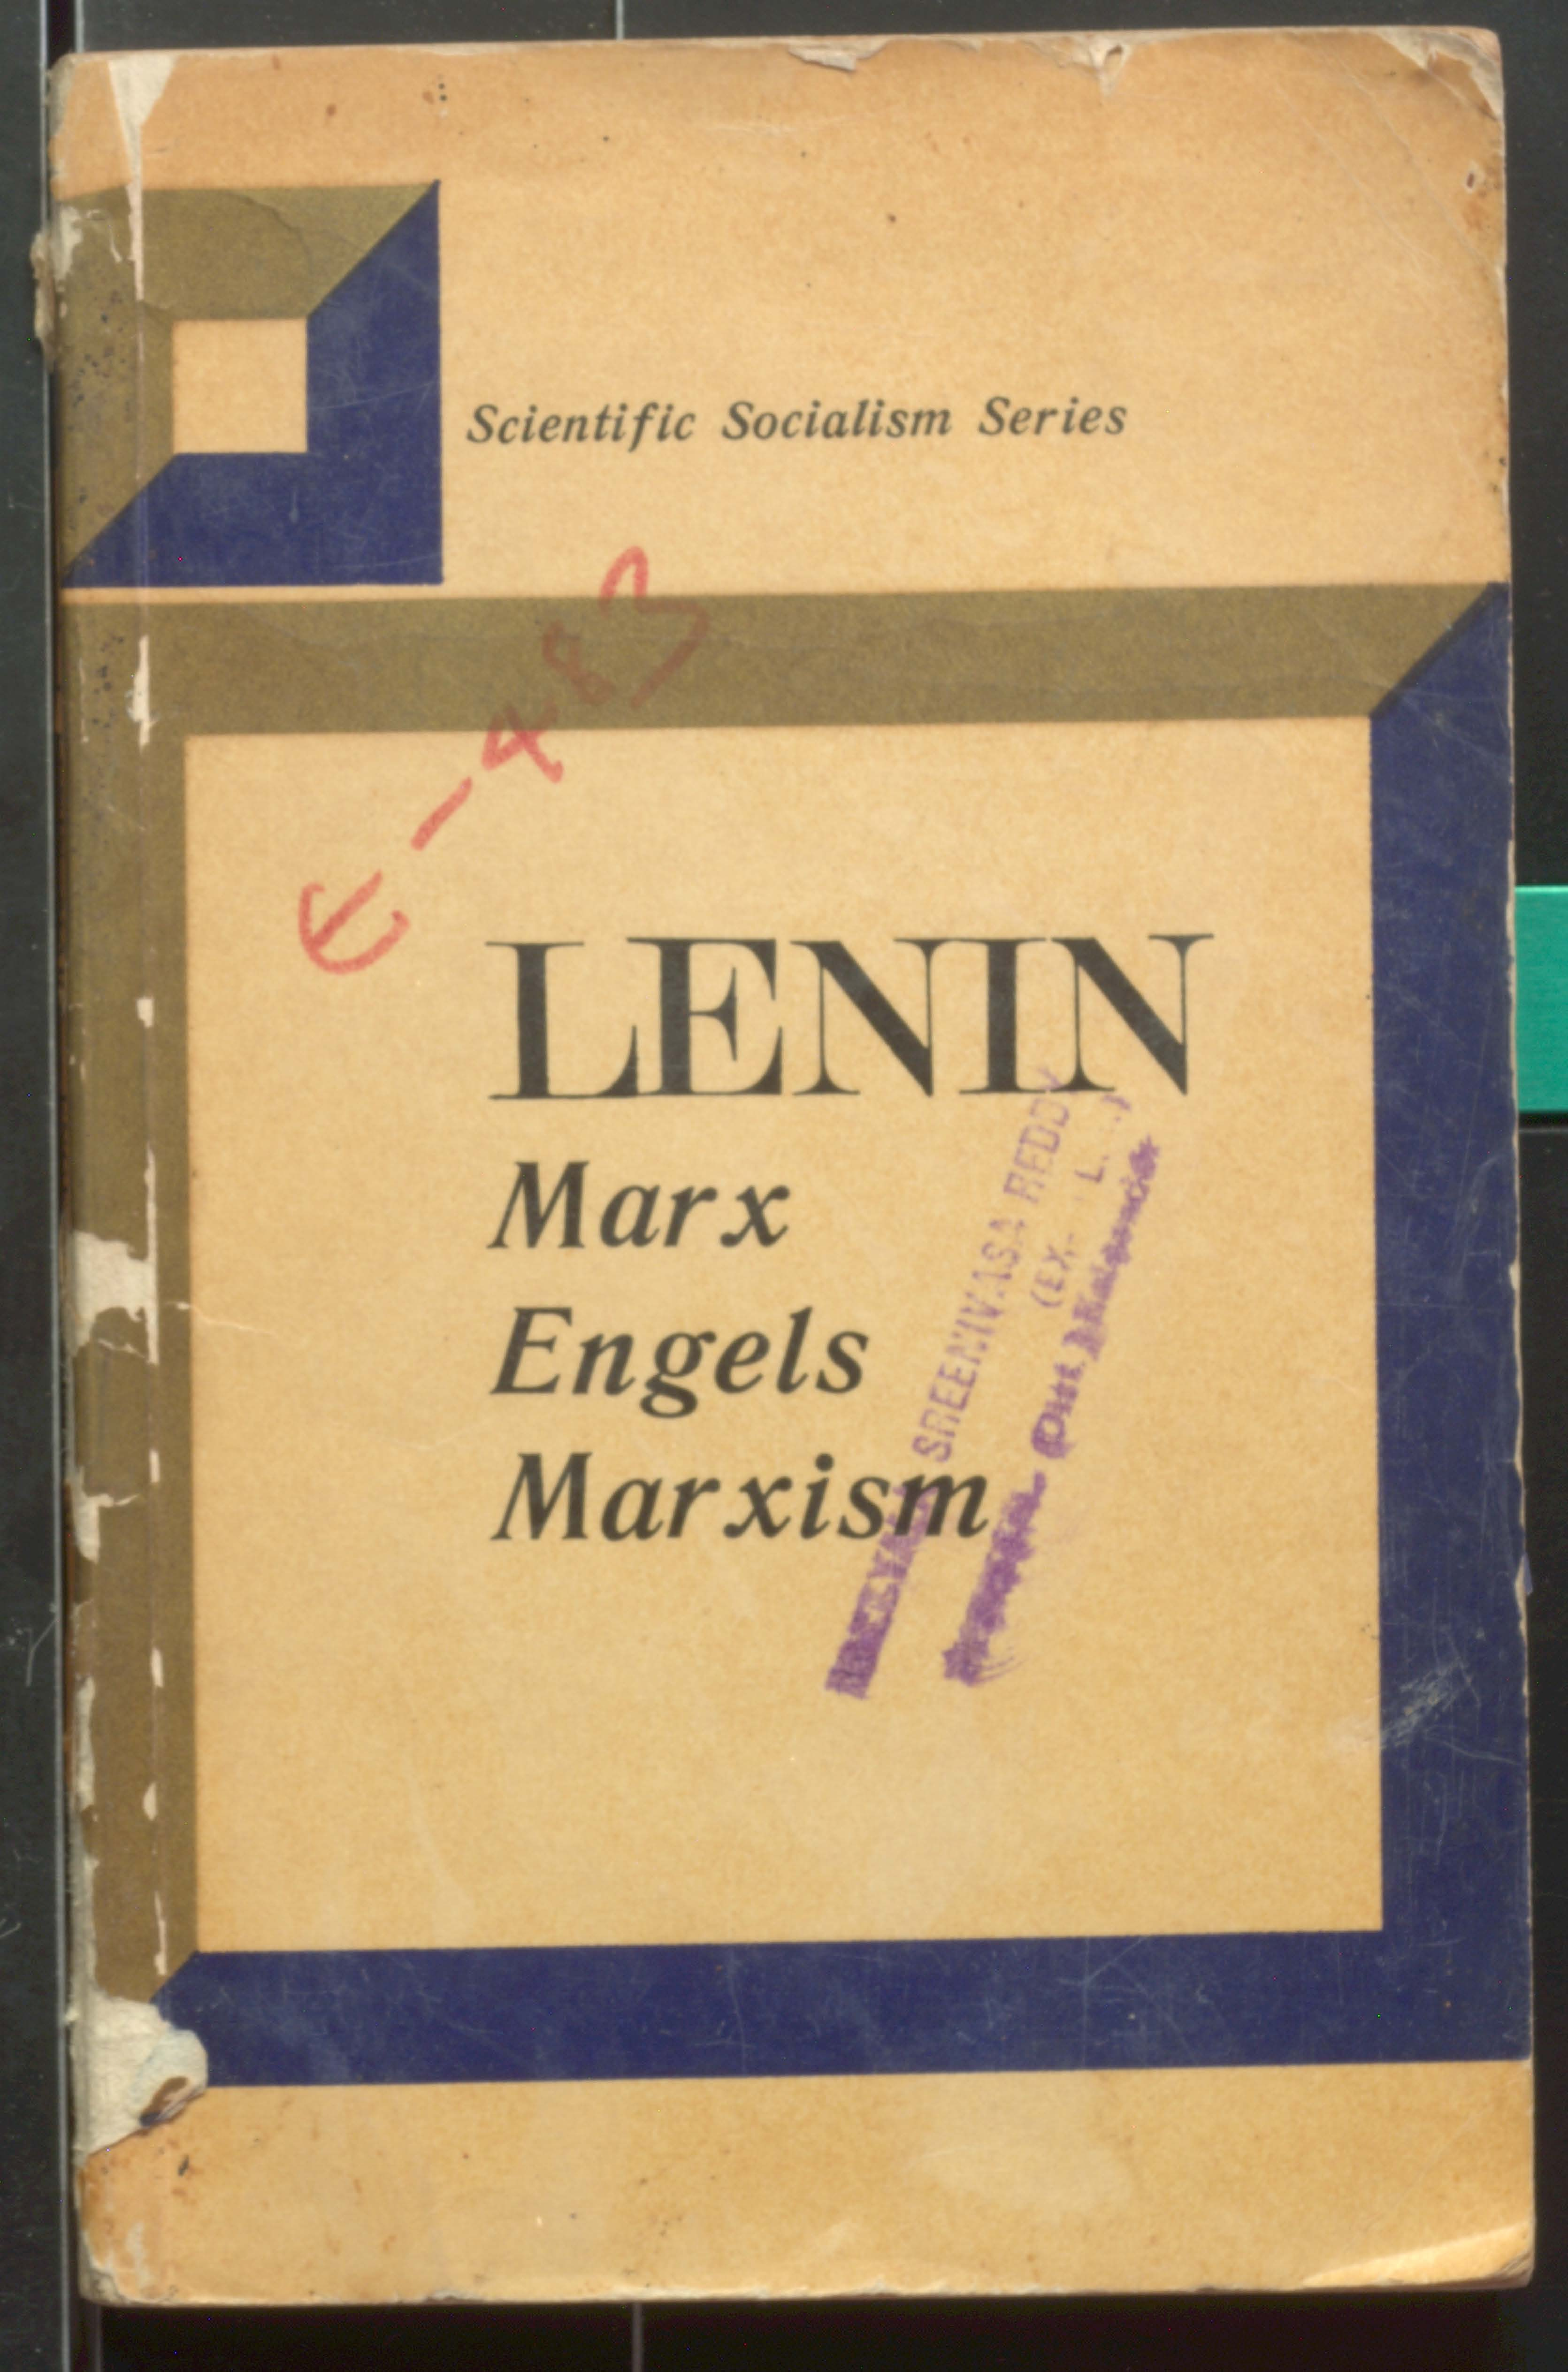 Lenin Marx engels Marxism